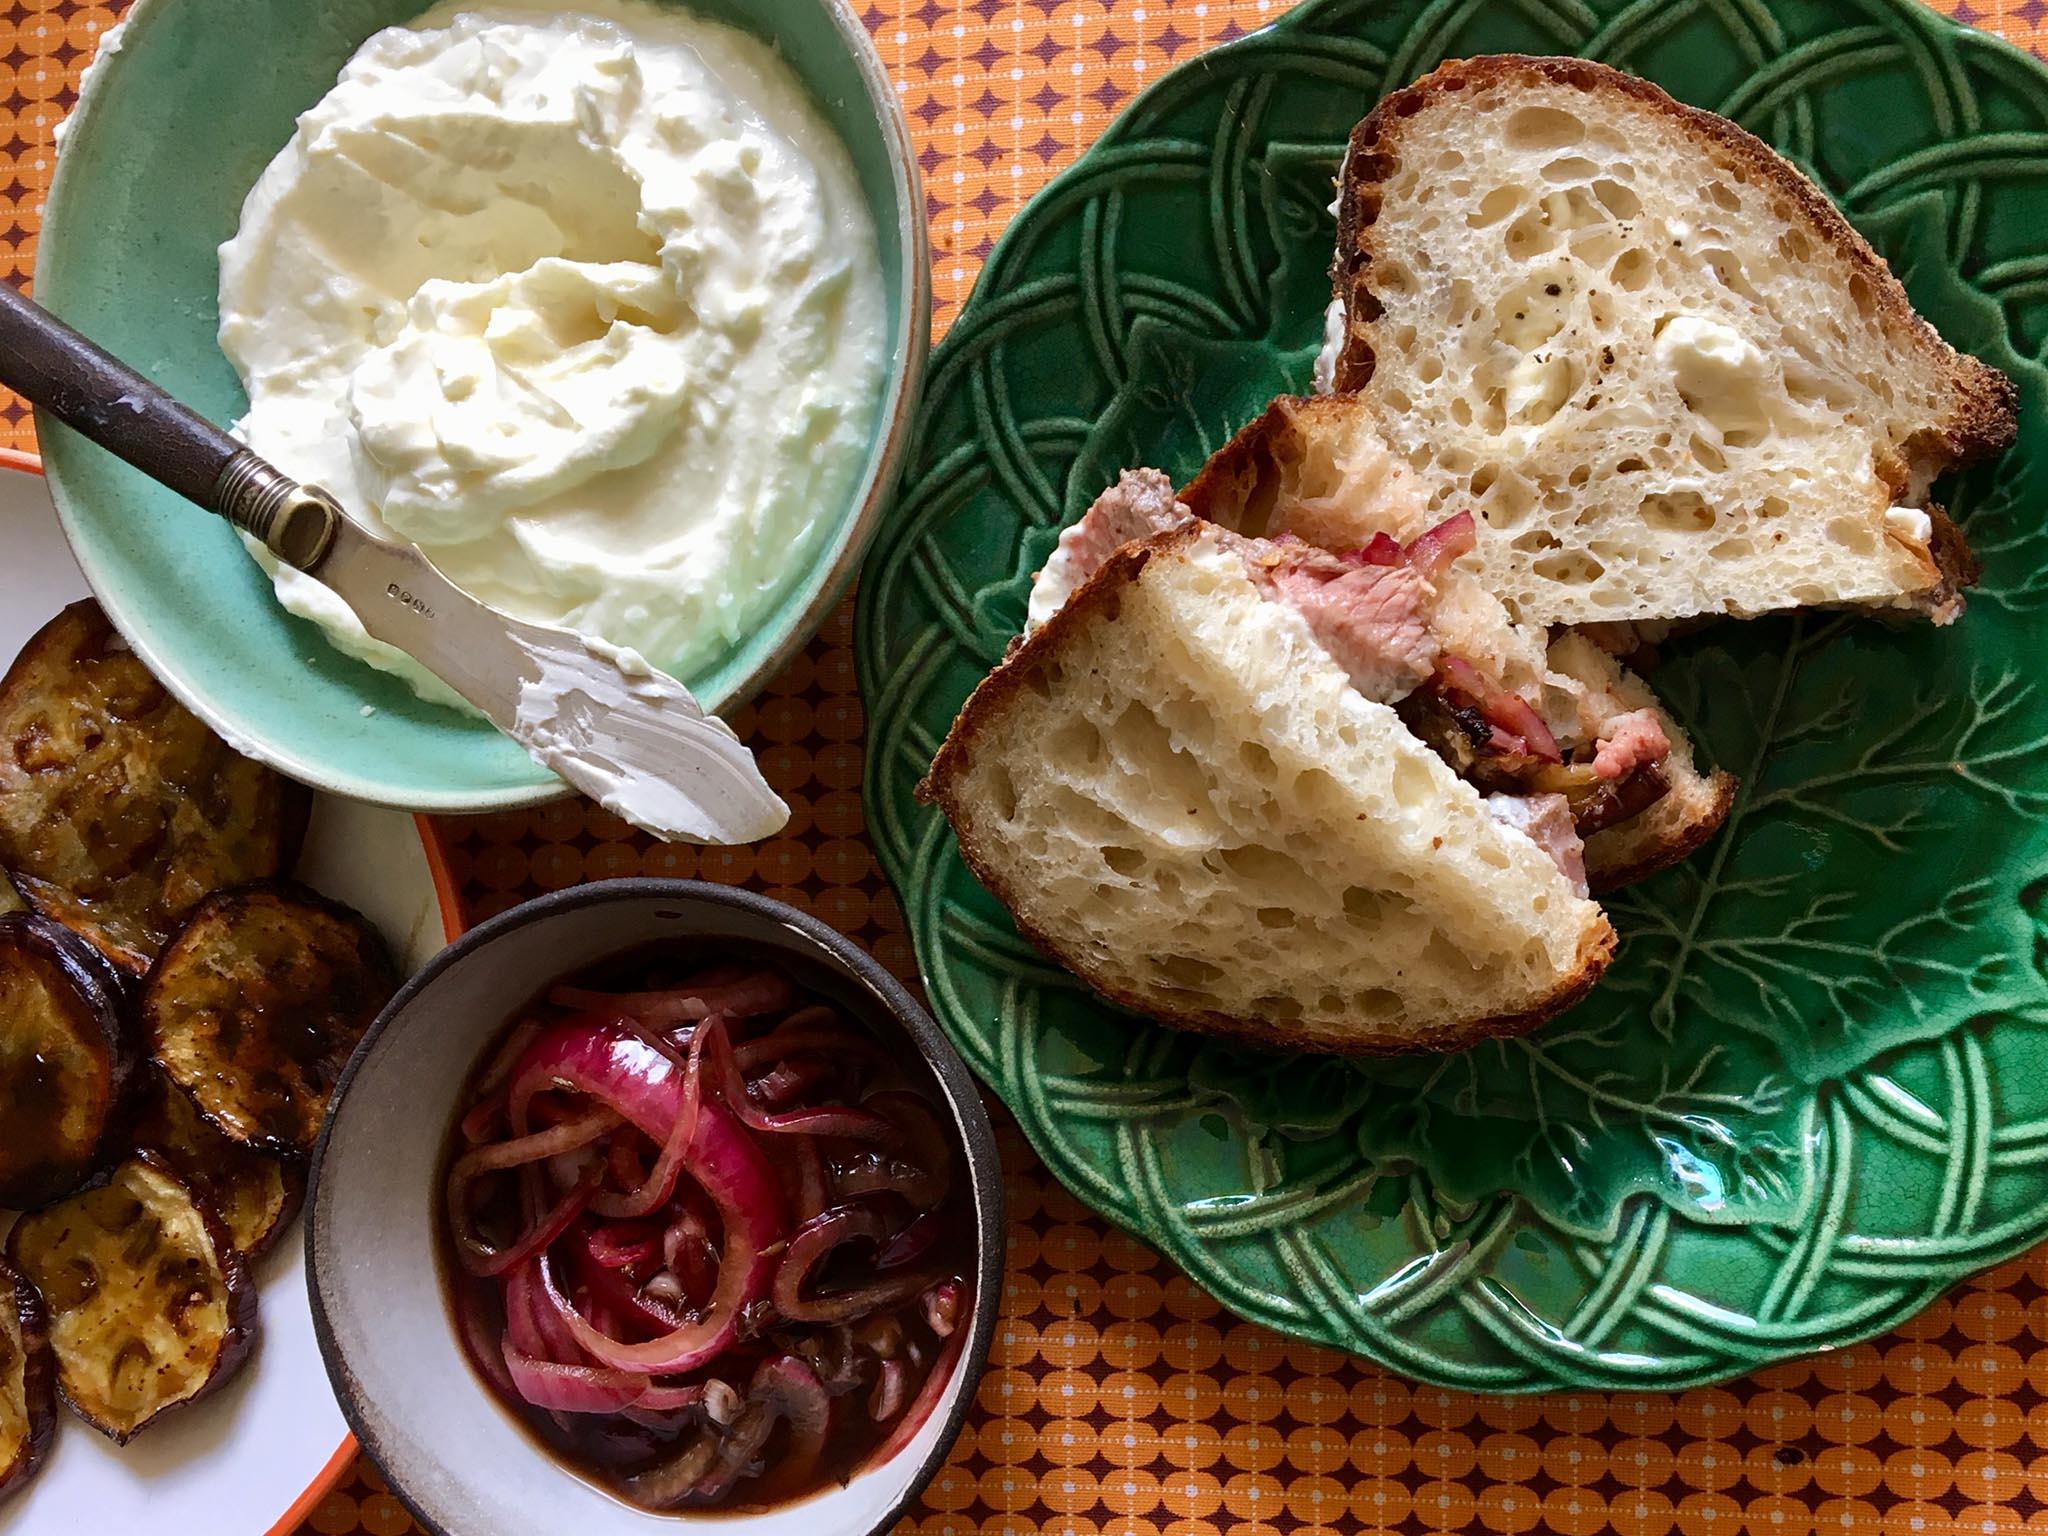 Meta feta: a boring sandwich is a sin against food (photography by Julia Platt Leonard)